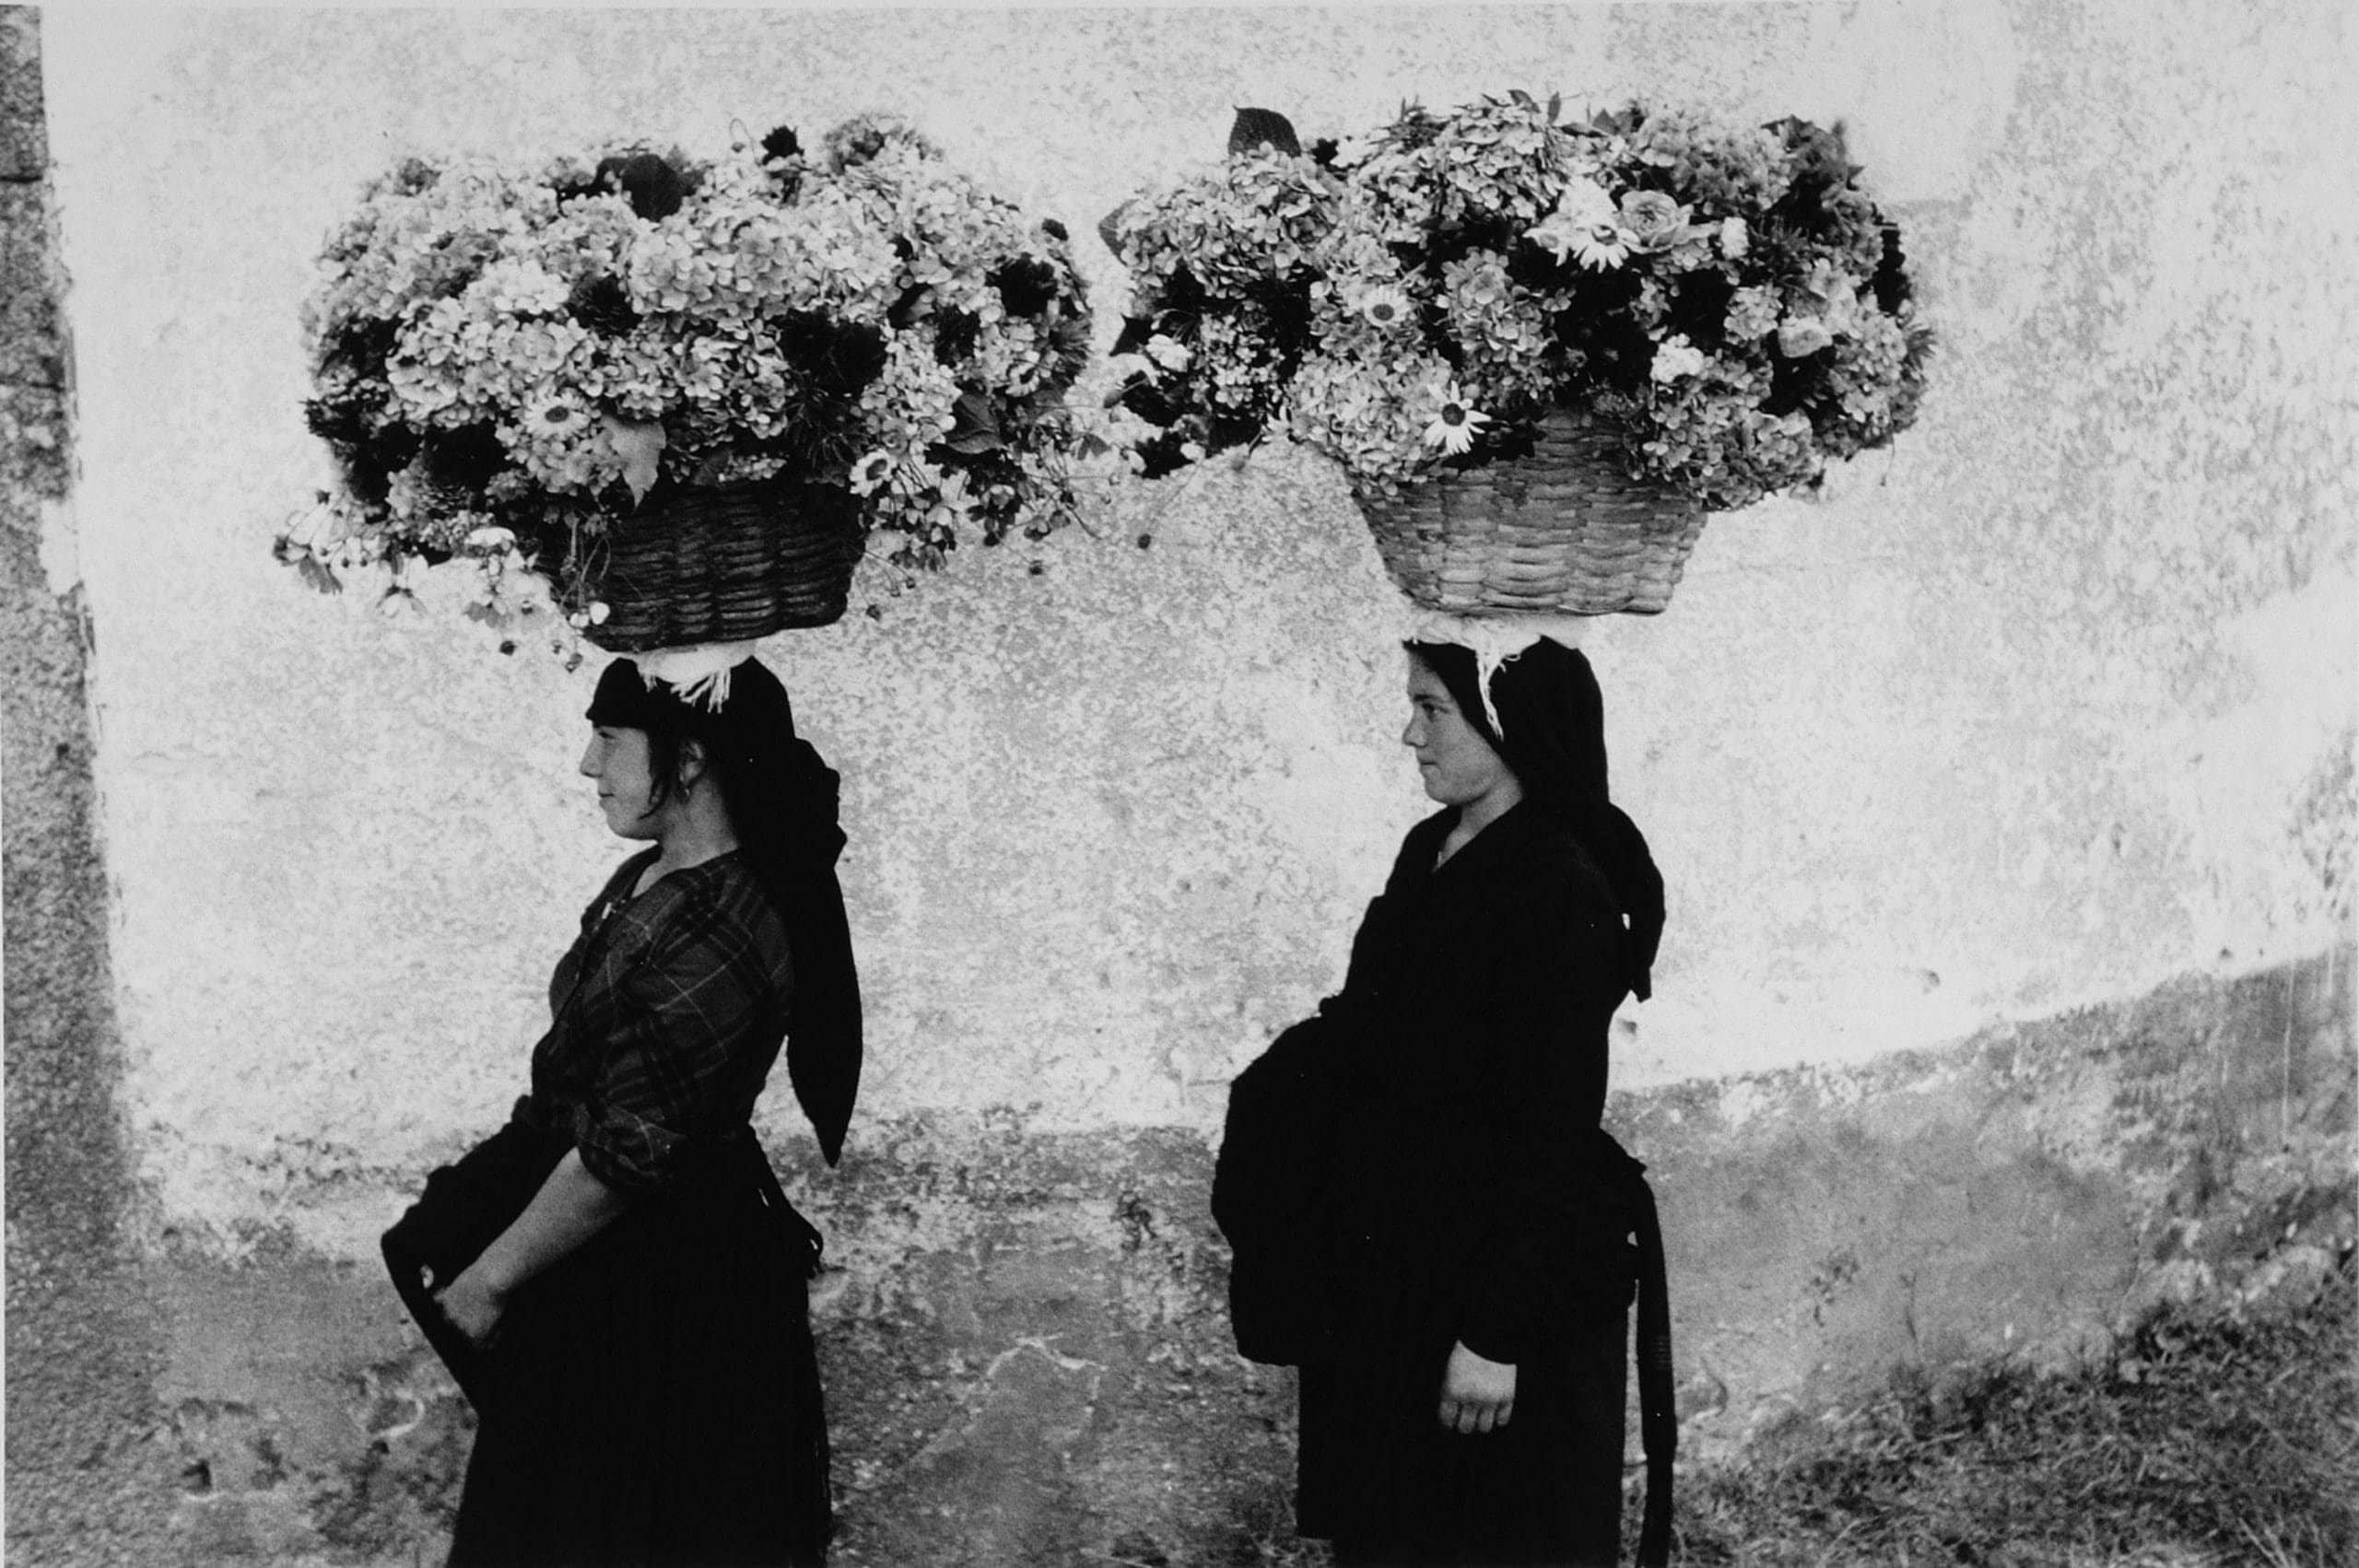 Édouard Boubat Femmes aux fleurs, Portugal 1958 (Paris, 1923 - 1999) 1958 Gelatin silver print Collection of the Akron Art Museum Gift of Kenneth G. Futter 1986.070